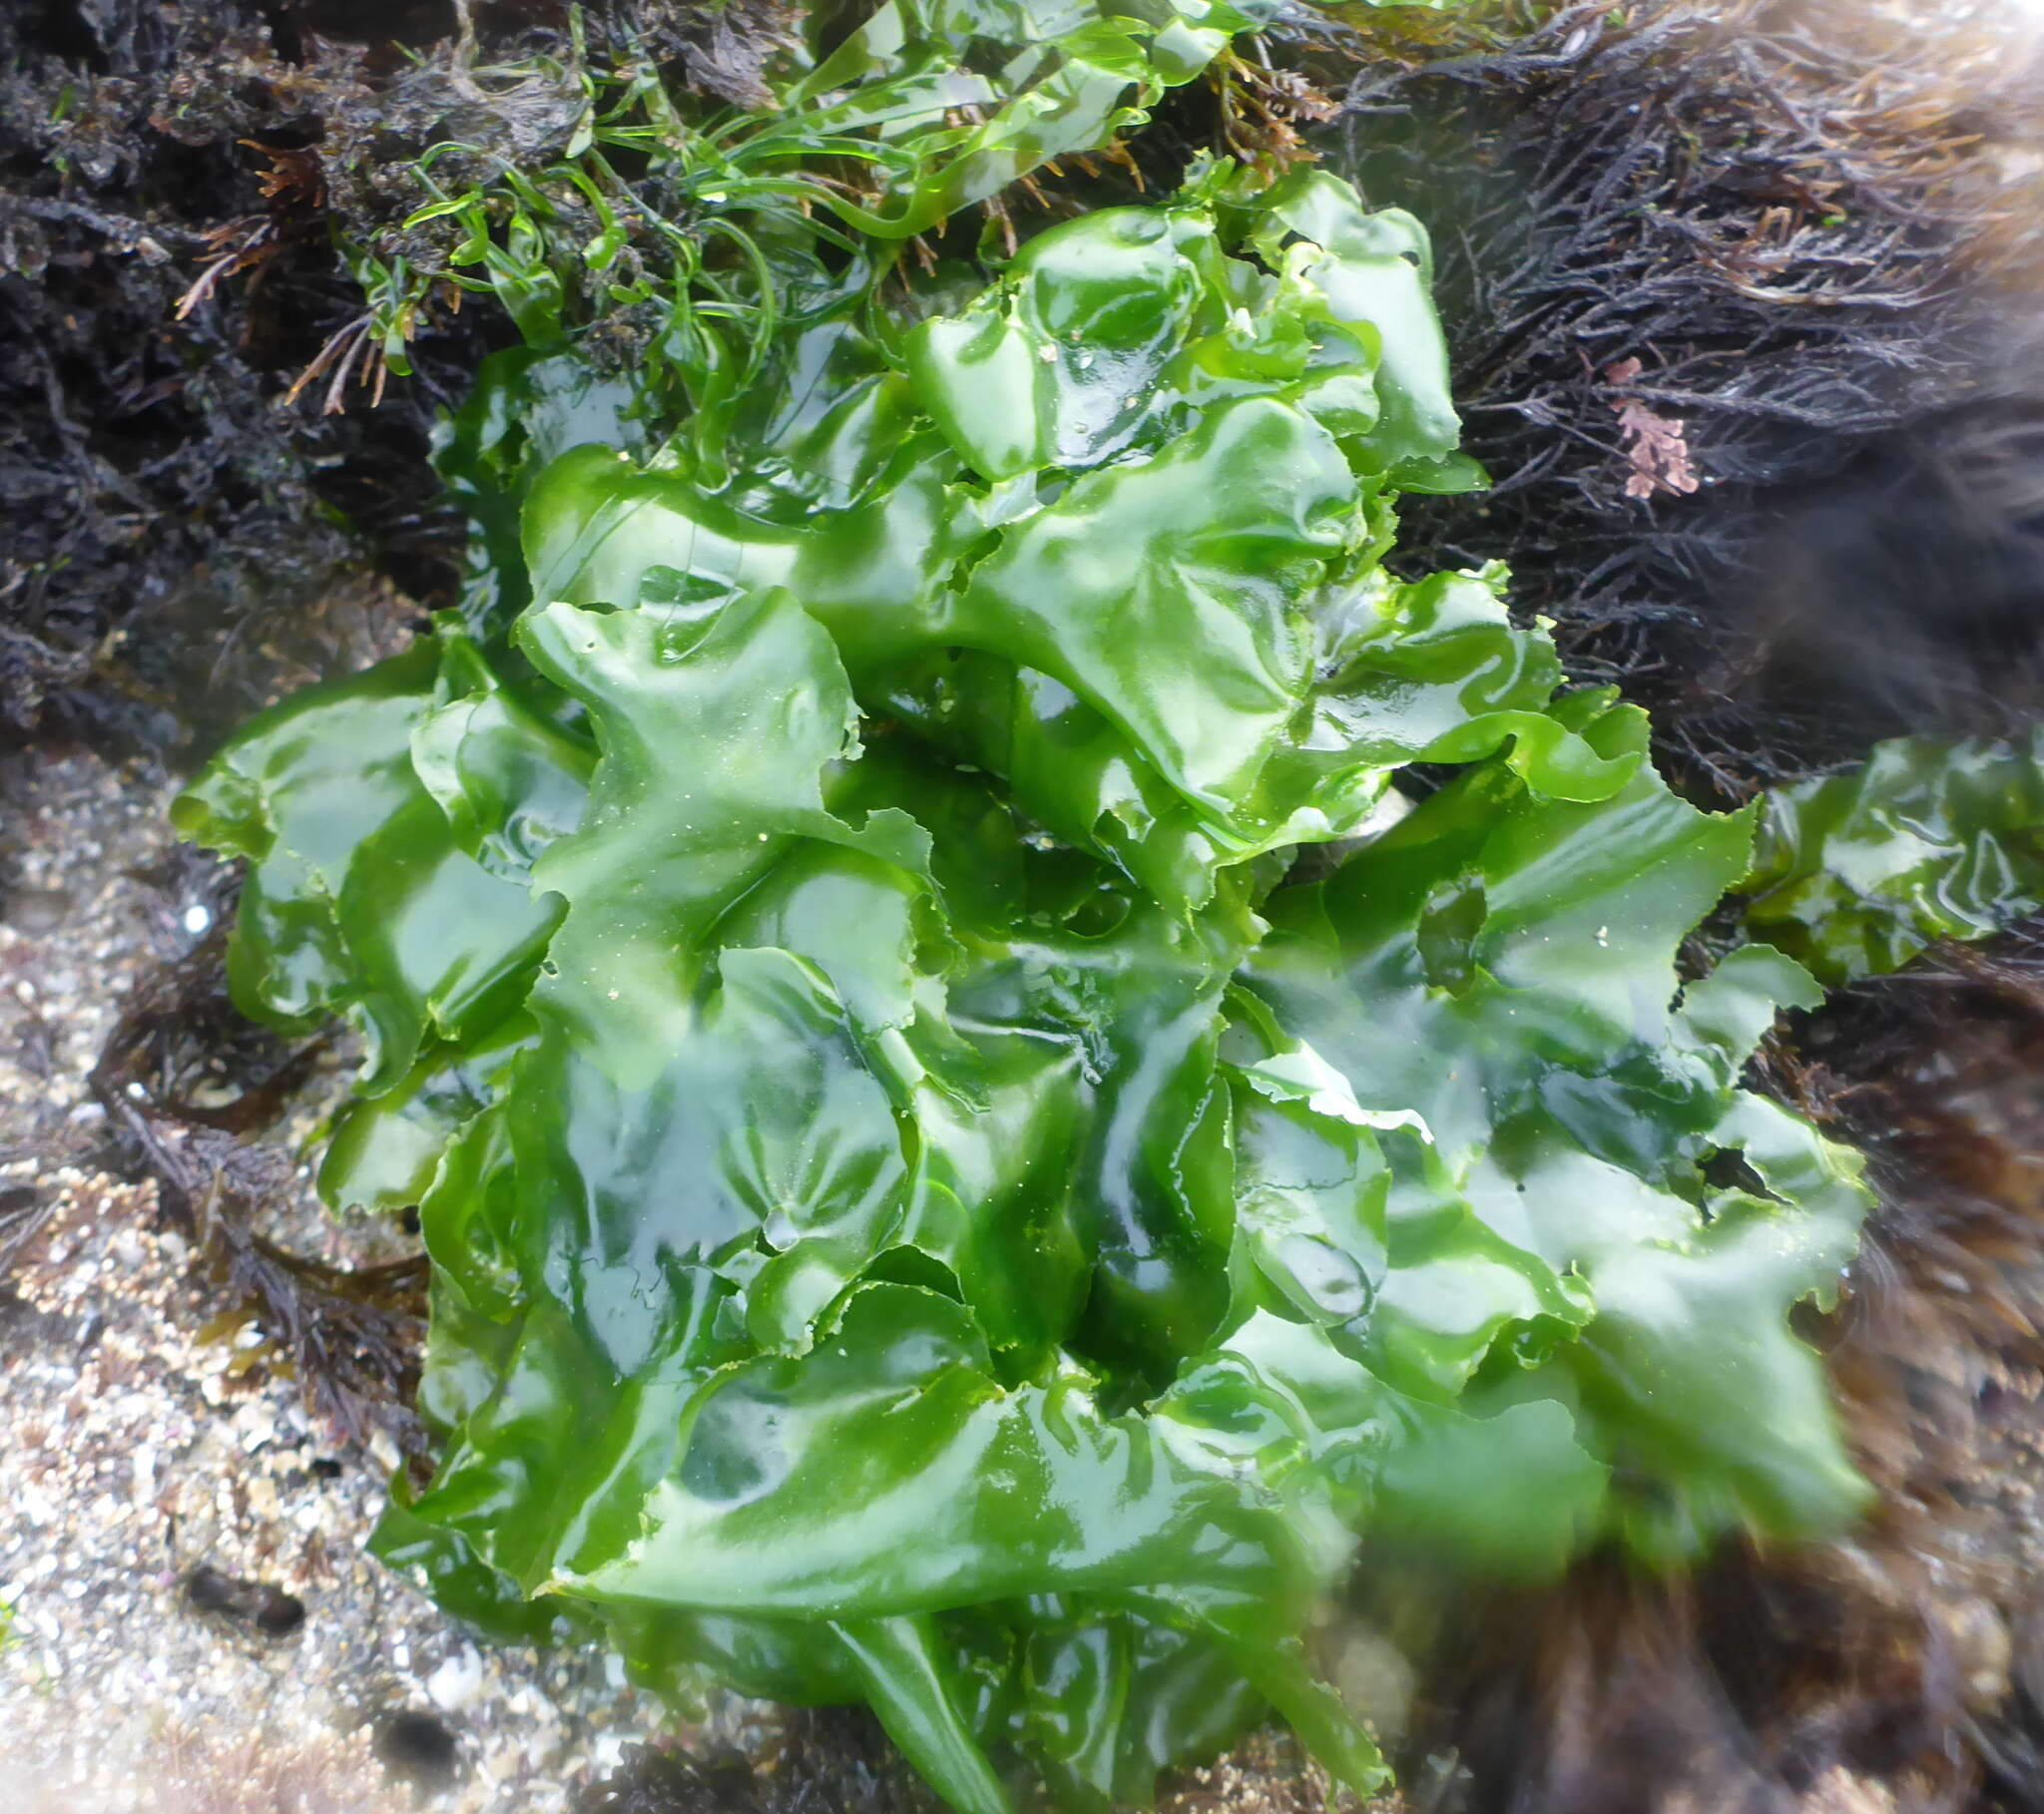 Image of Sea lettuce